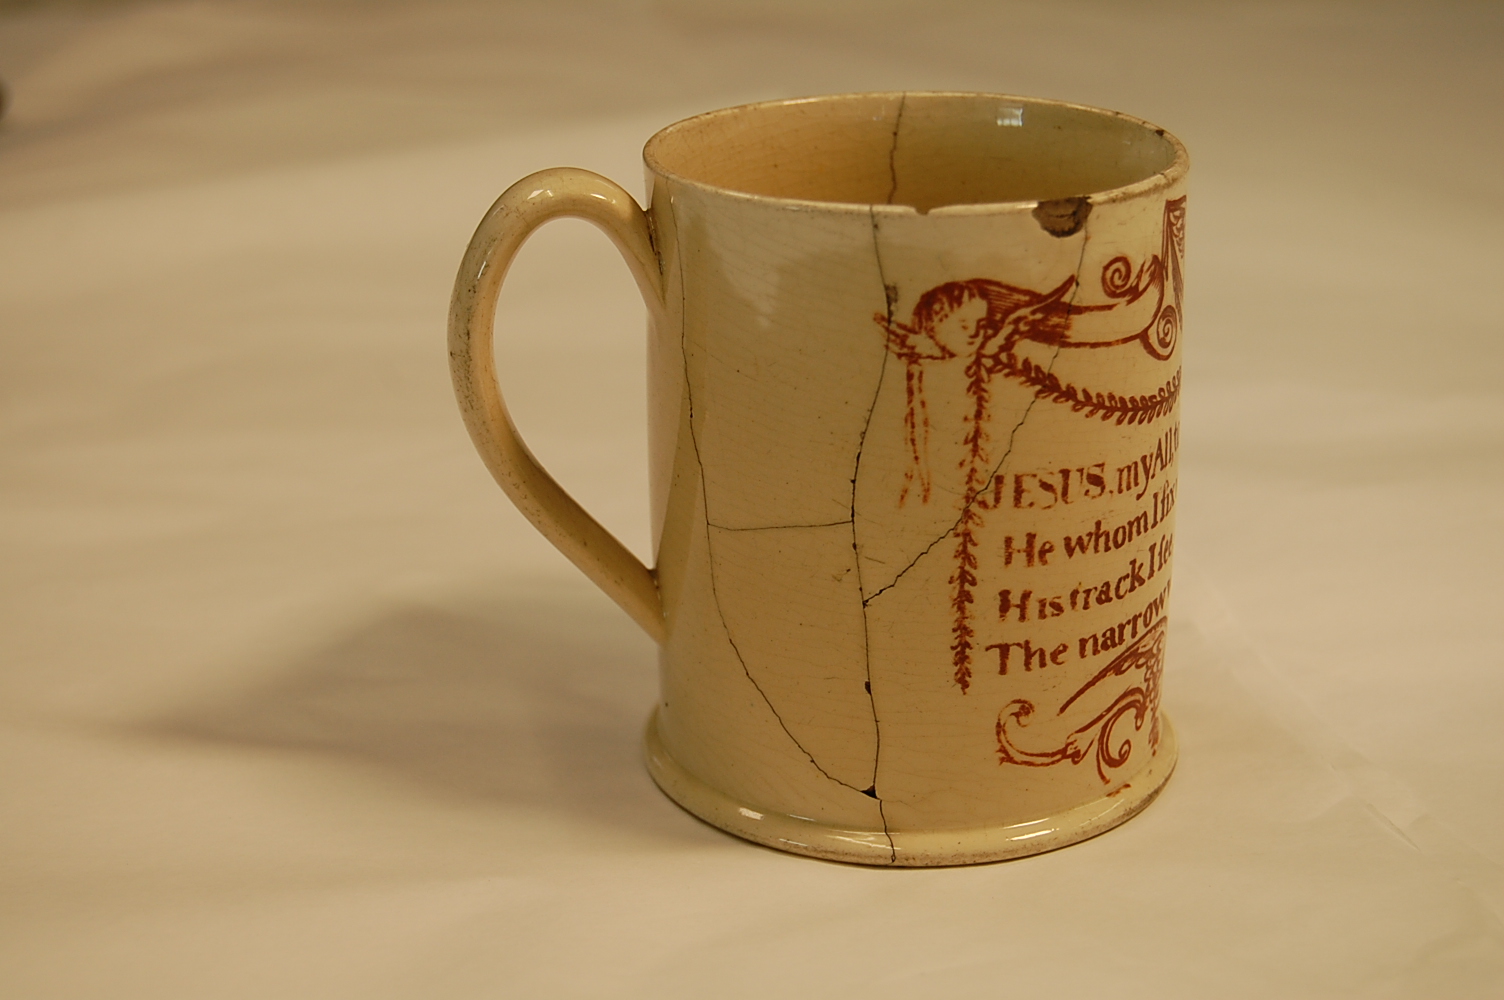 painted creamware mug made circa 1750-70